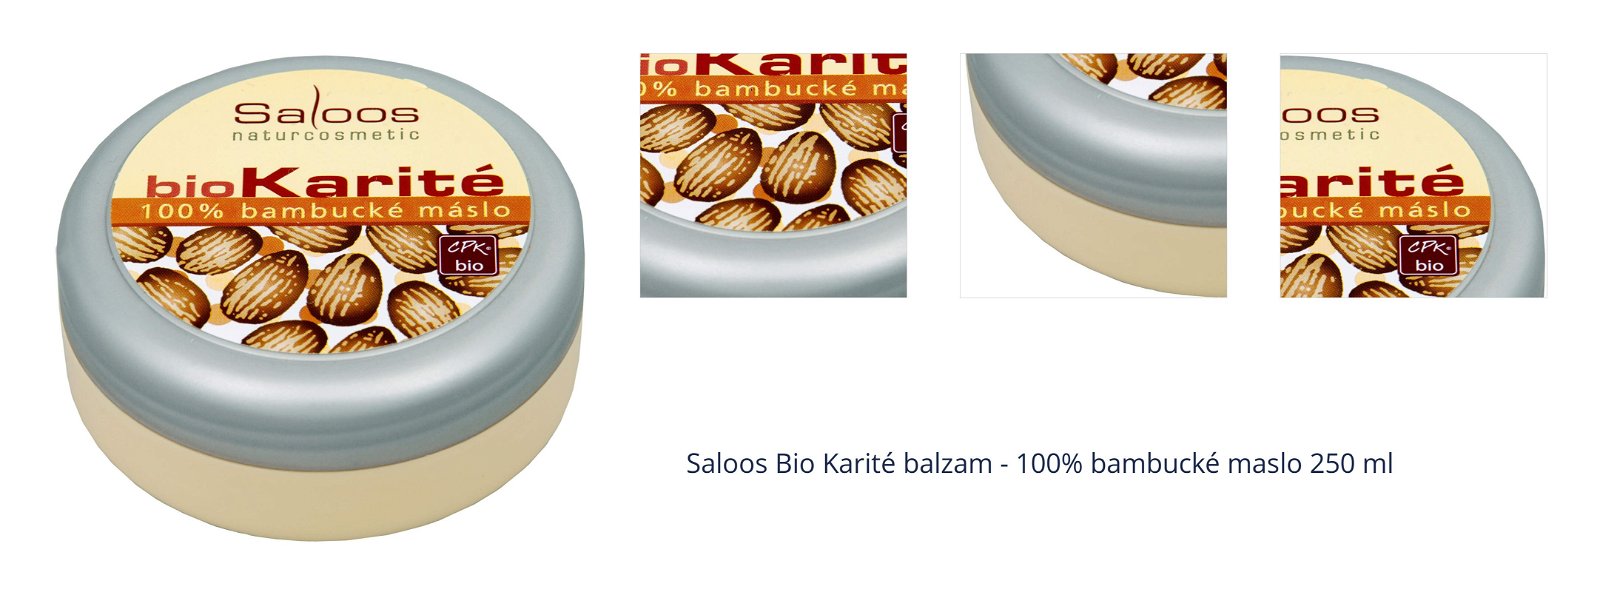 Saloos Bio Karité balzam - 100% bambucké maslo 250 ml 1